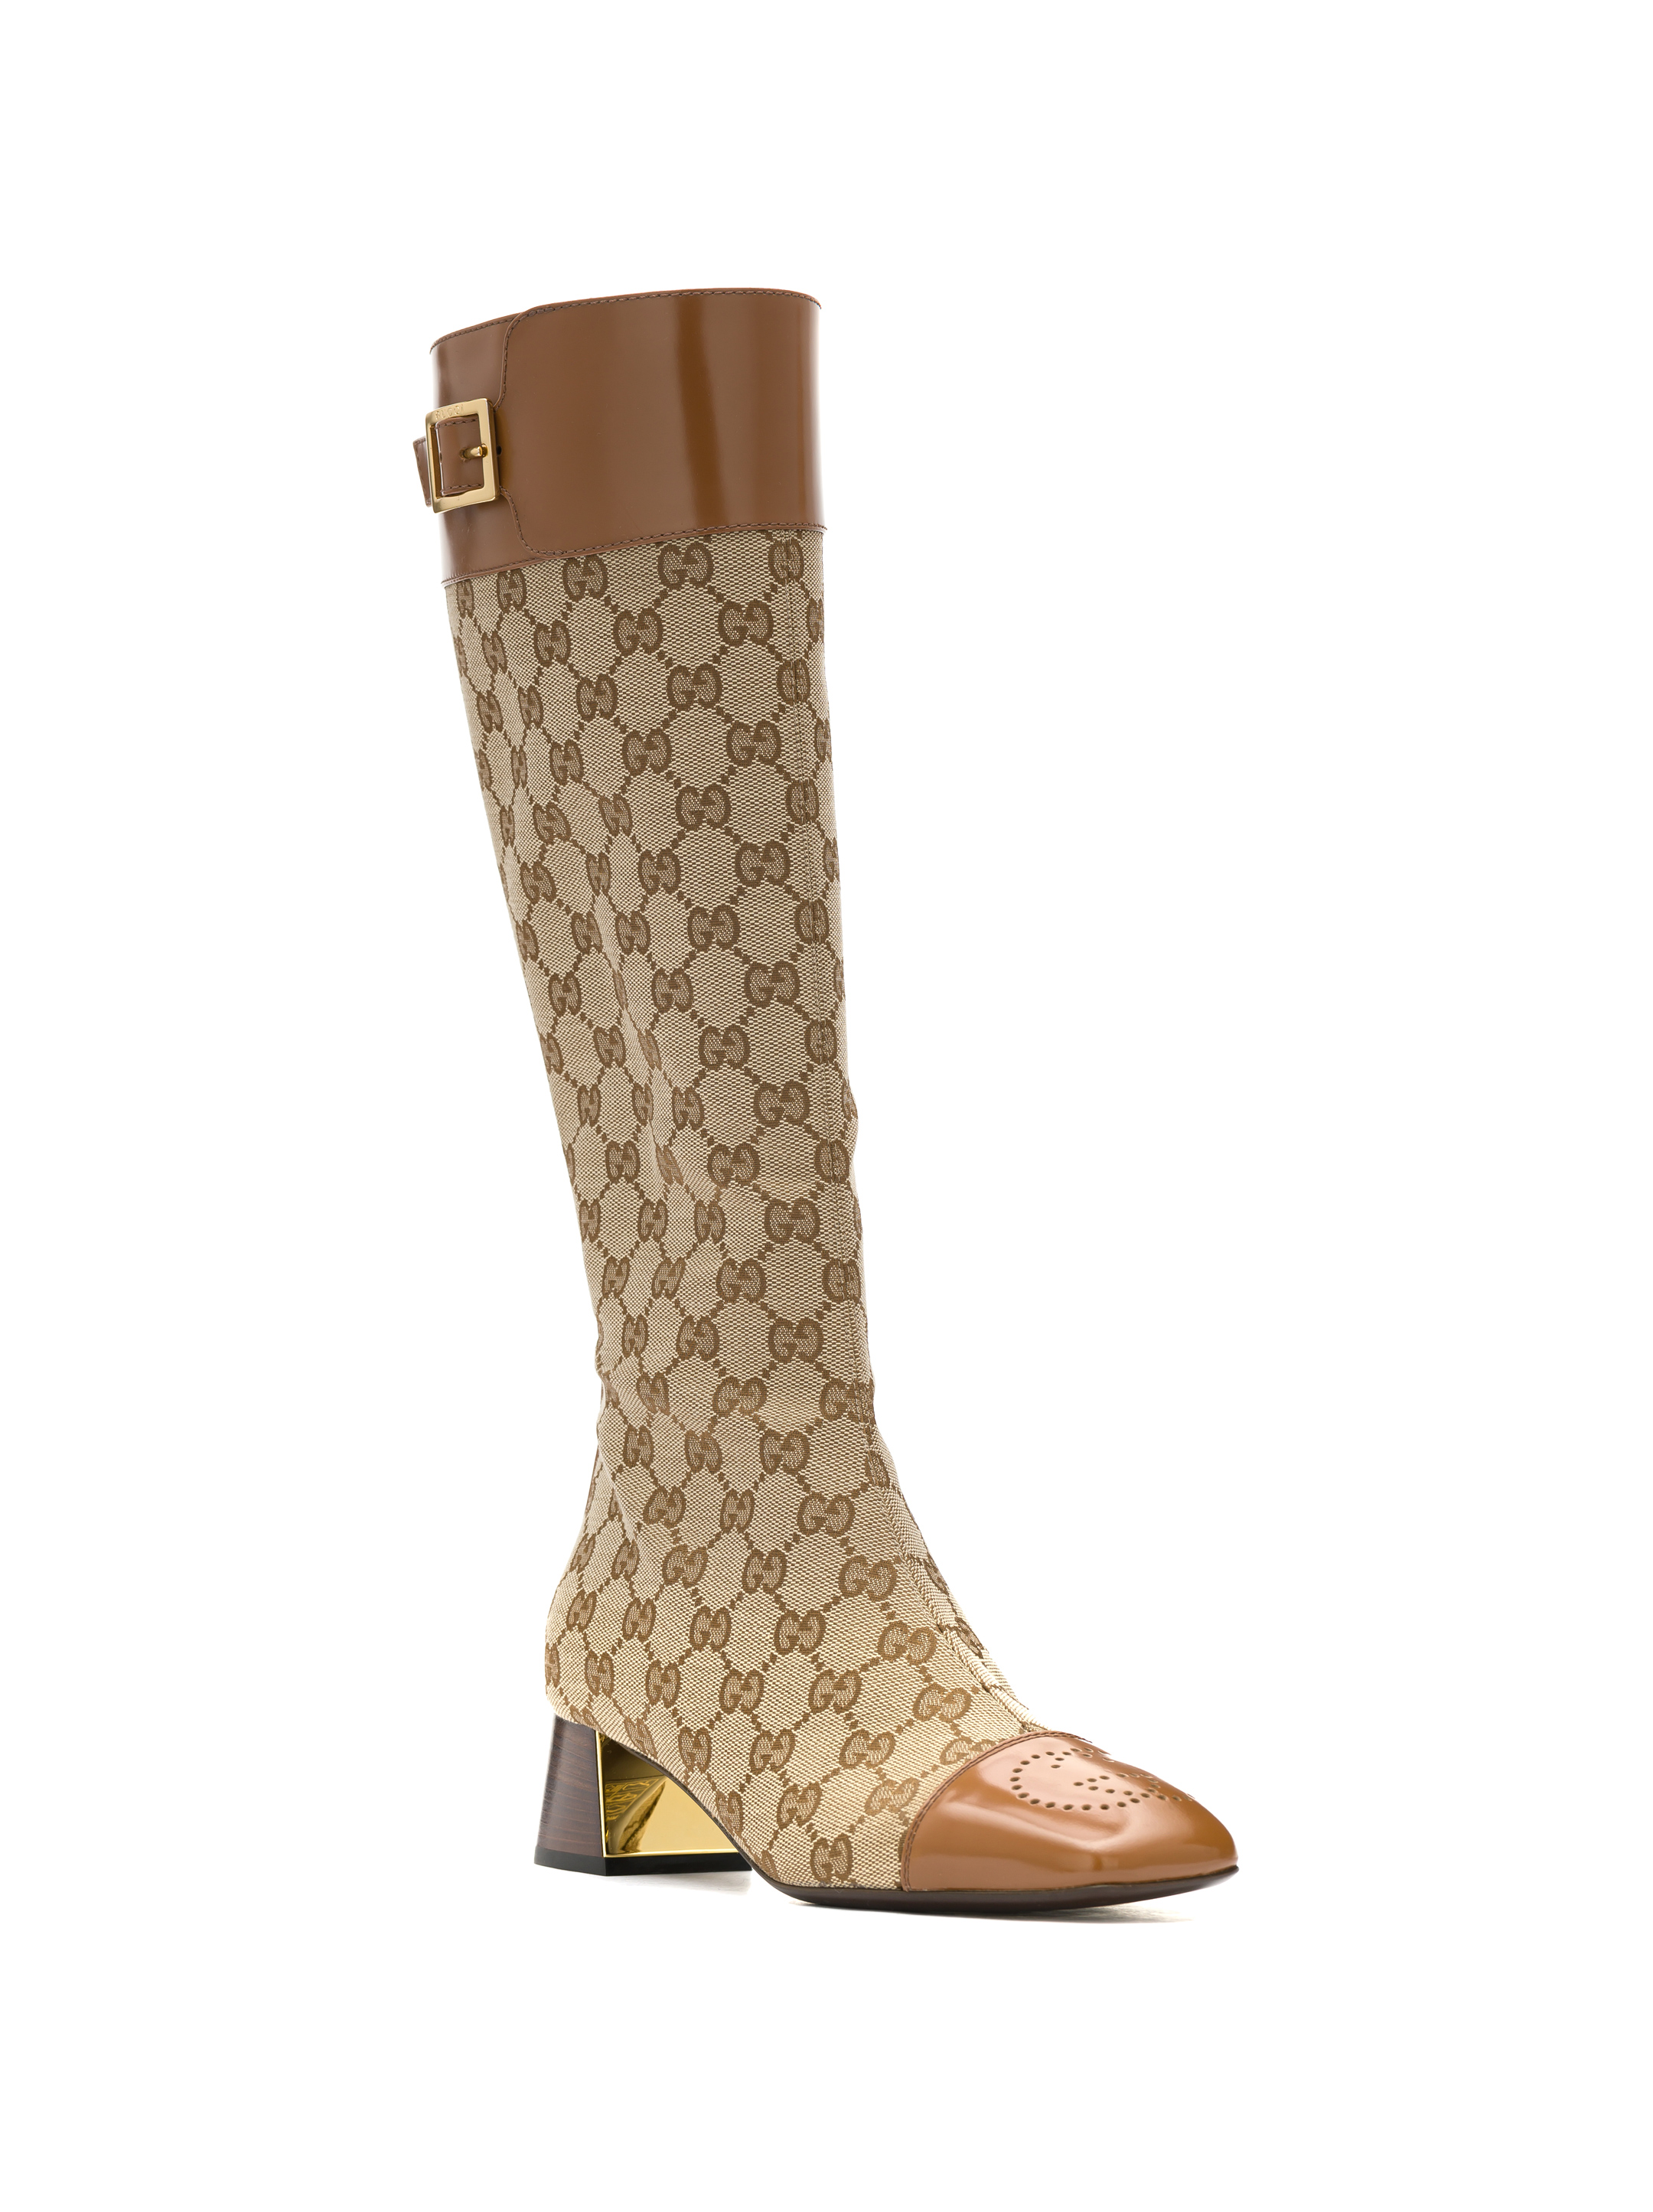 Antibiotika Medic skade Gucci women's GG Supreme monogram High boots - buy for 821100 KZT in the  official Viled online store, art. 678278 HVKL0.9786_41_221